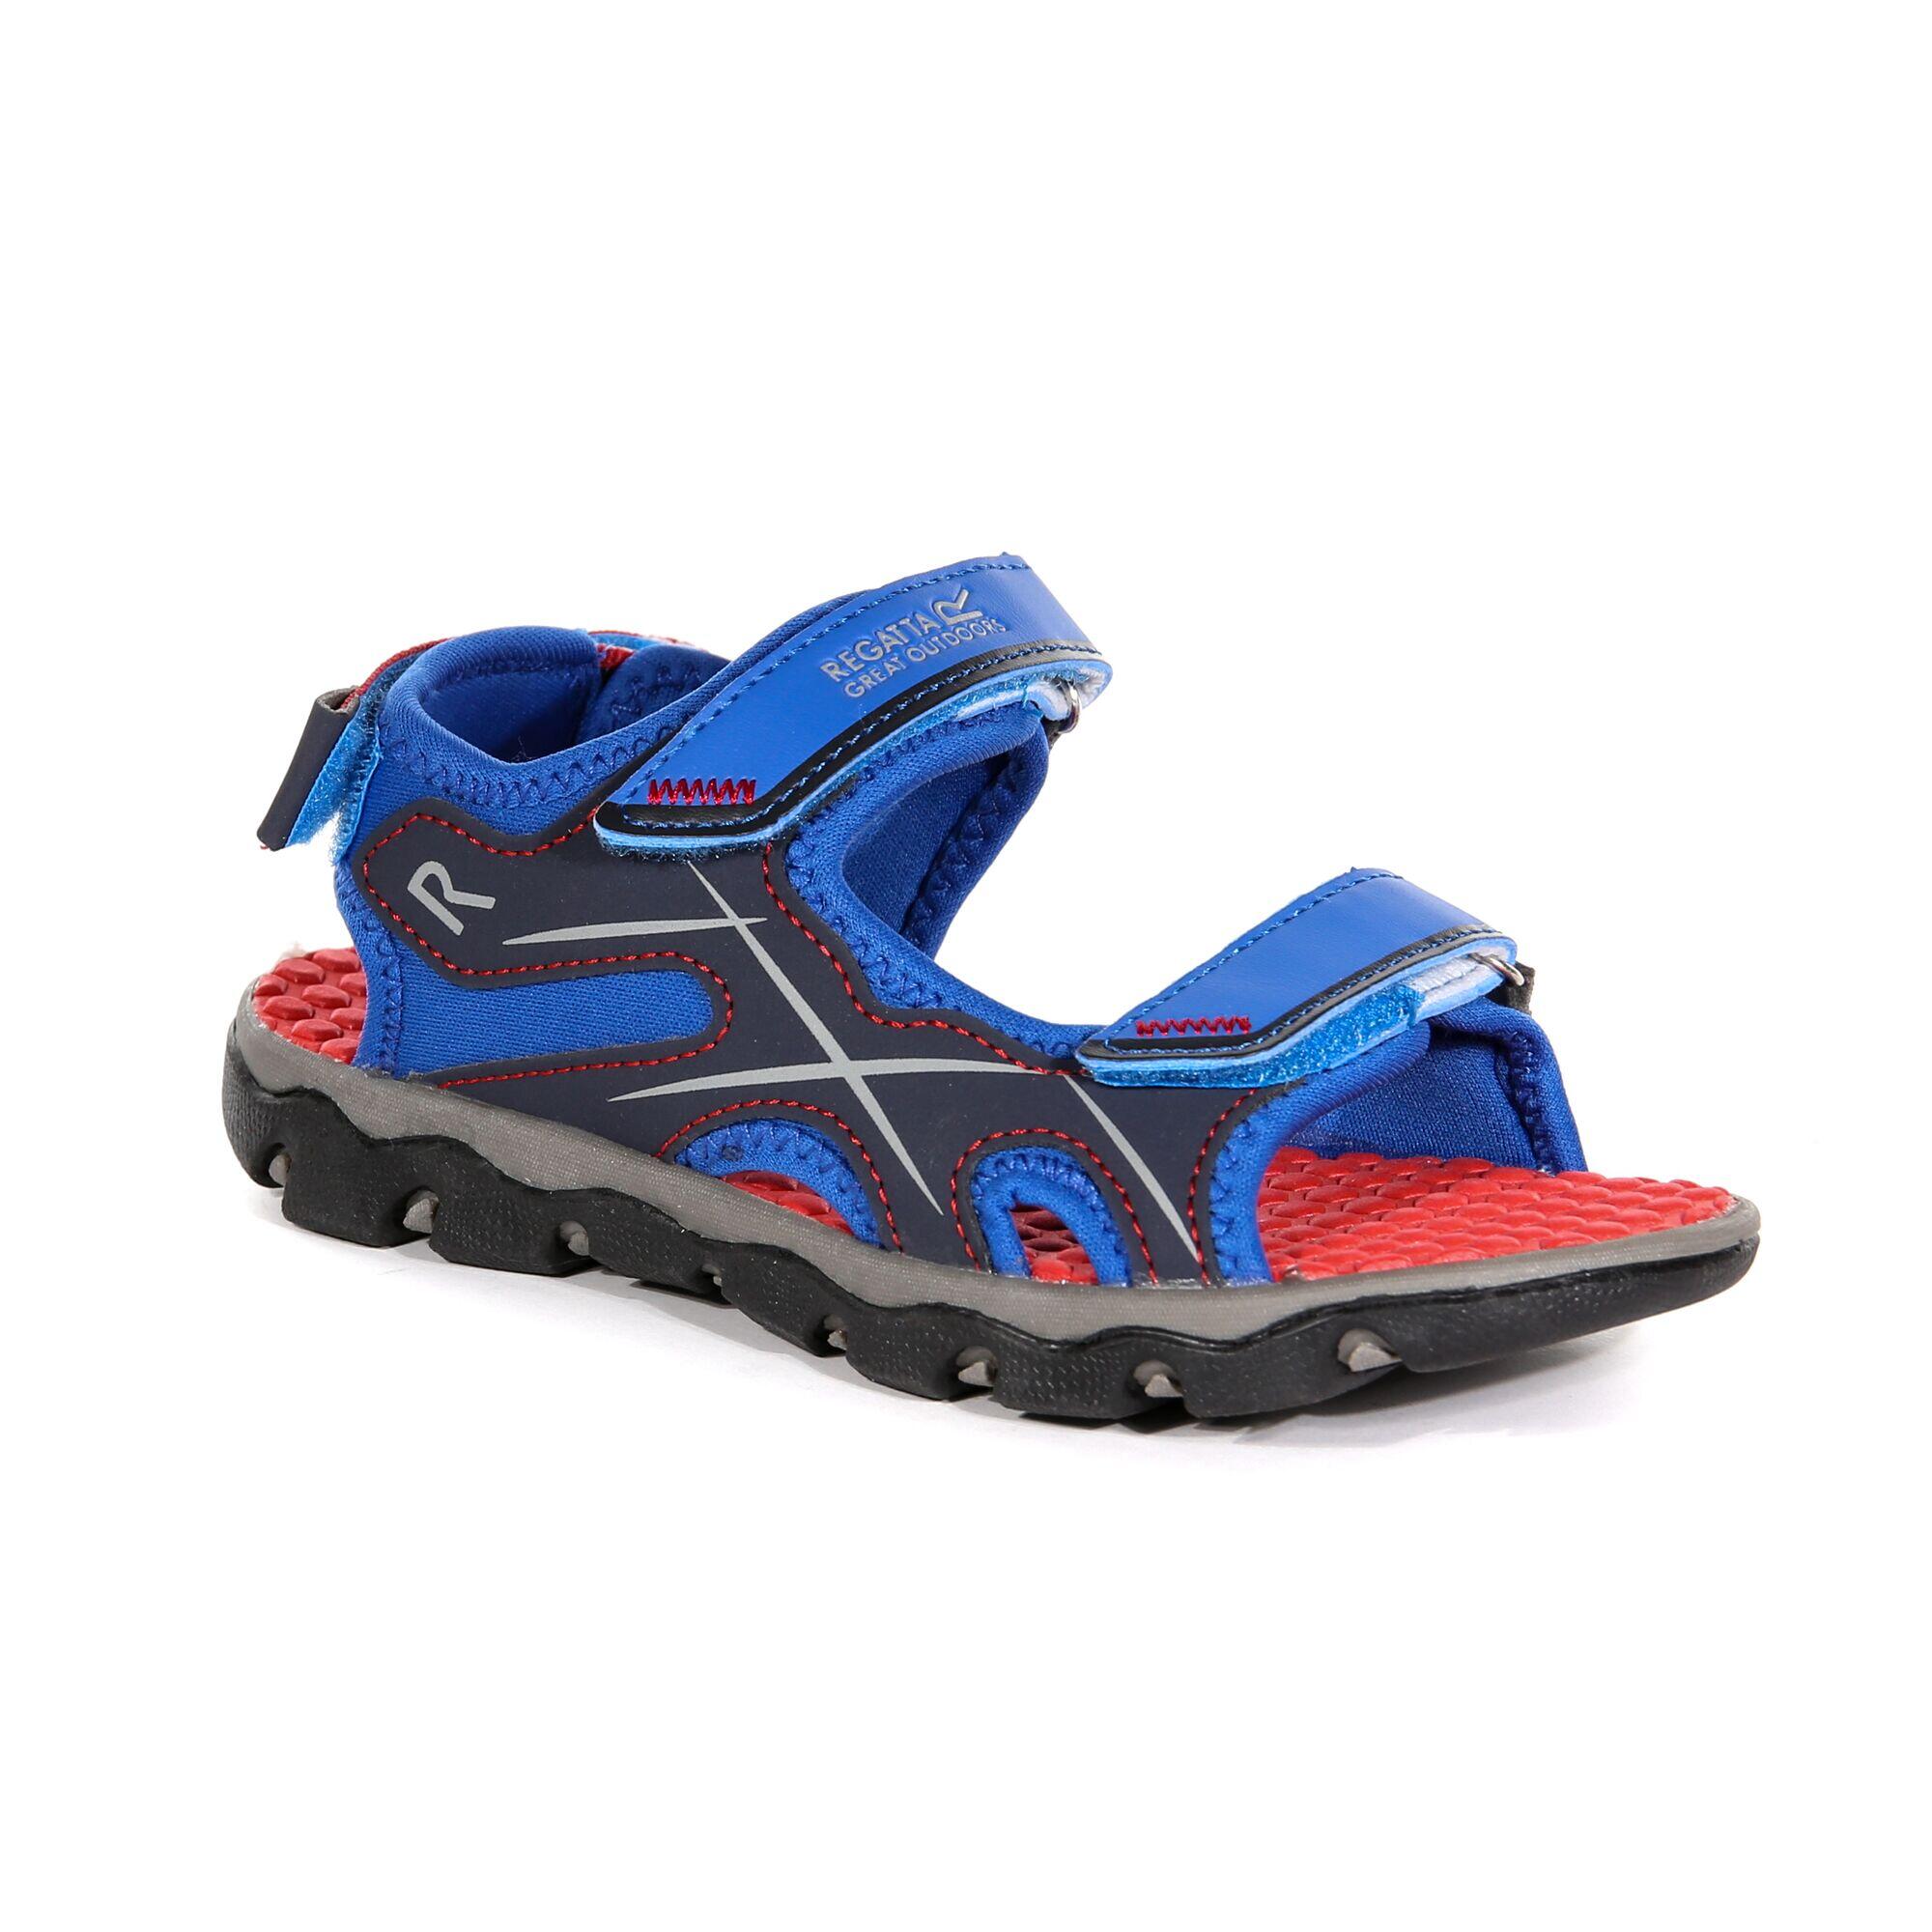 Kota Drift Junior Kids Walking Sandals - Oxford Blue Pepper 2/5